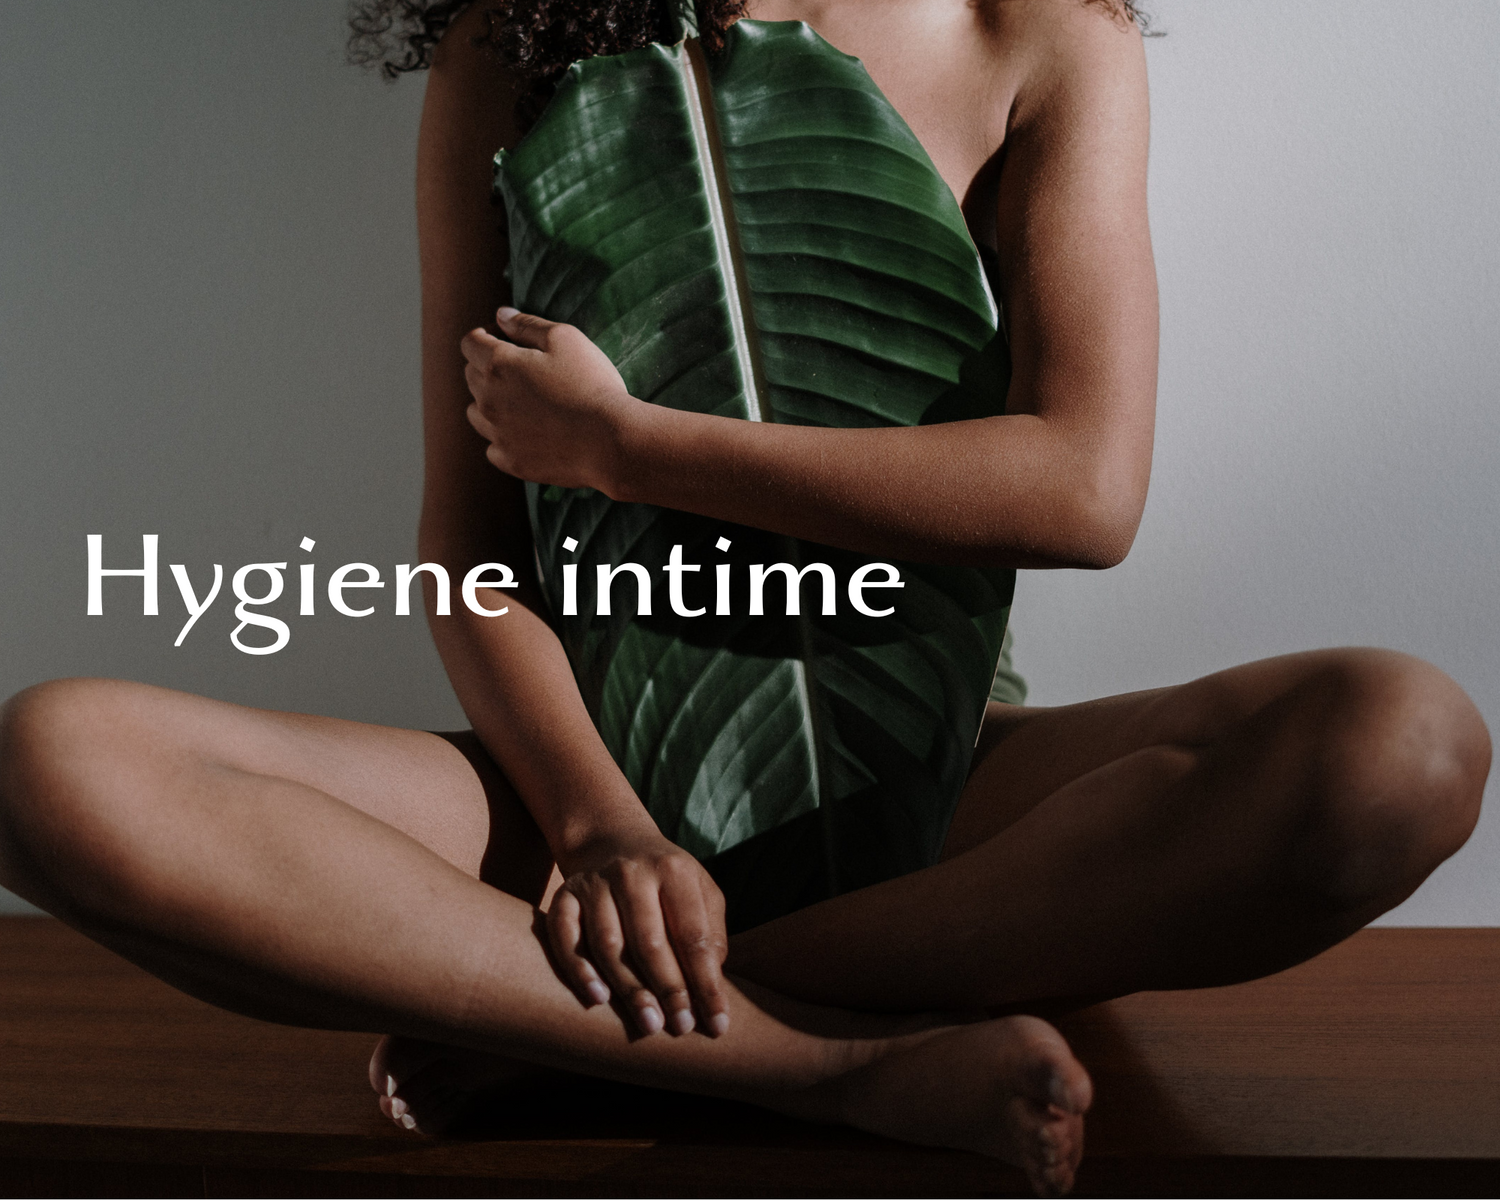 Hygiene intime